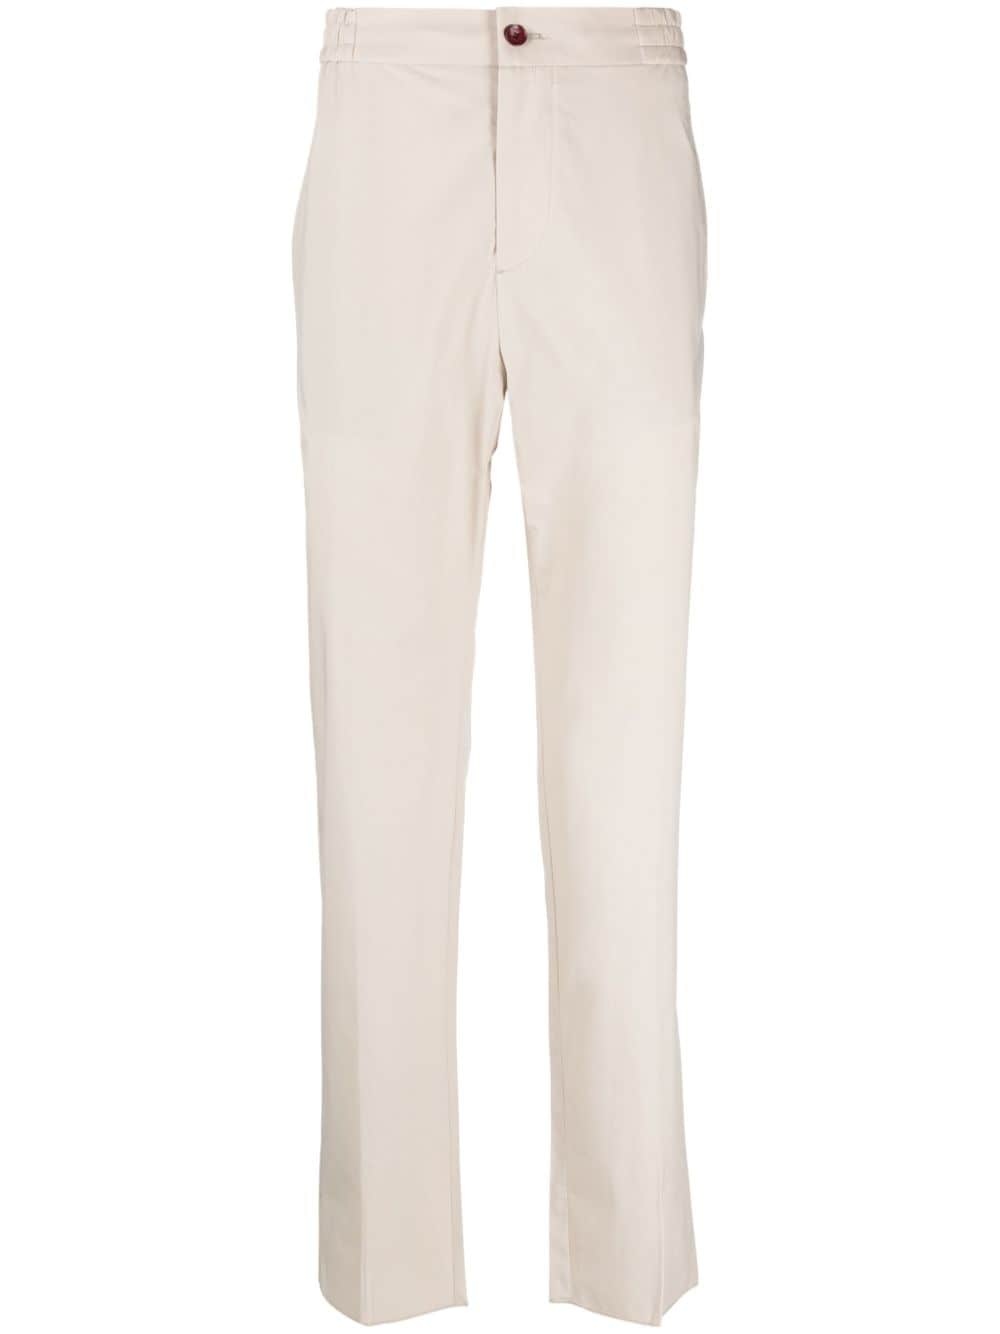 press-crease cotton trousers - 1